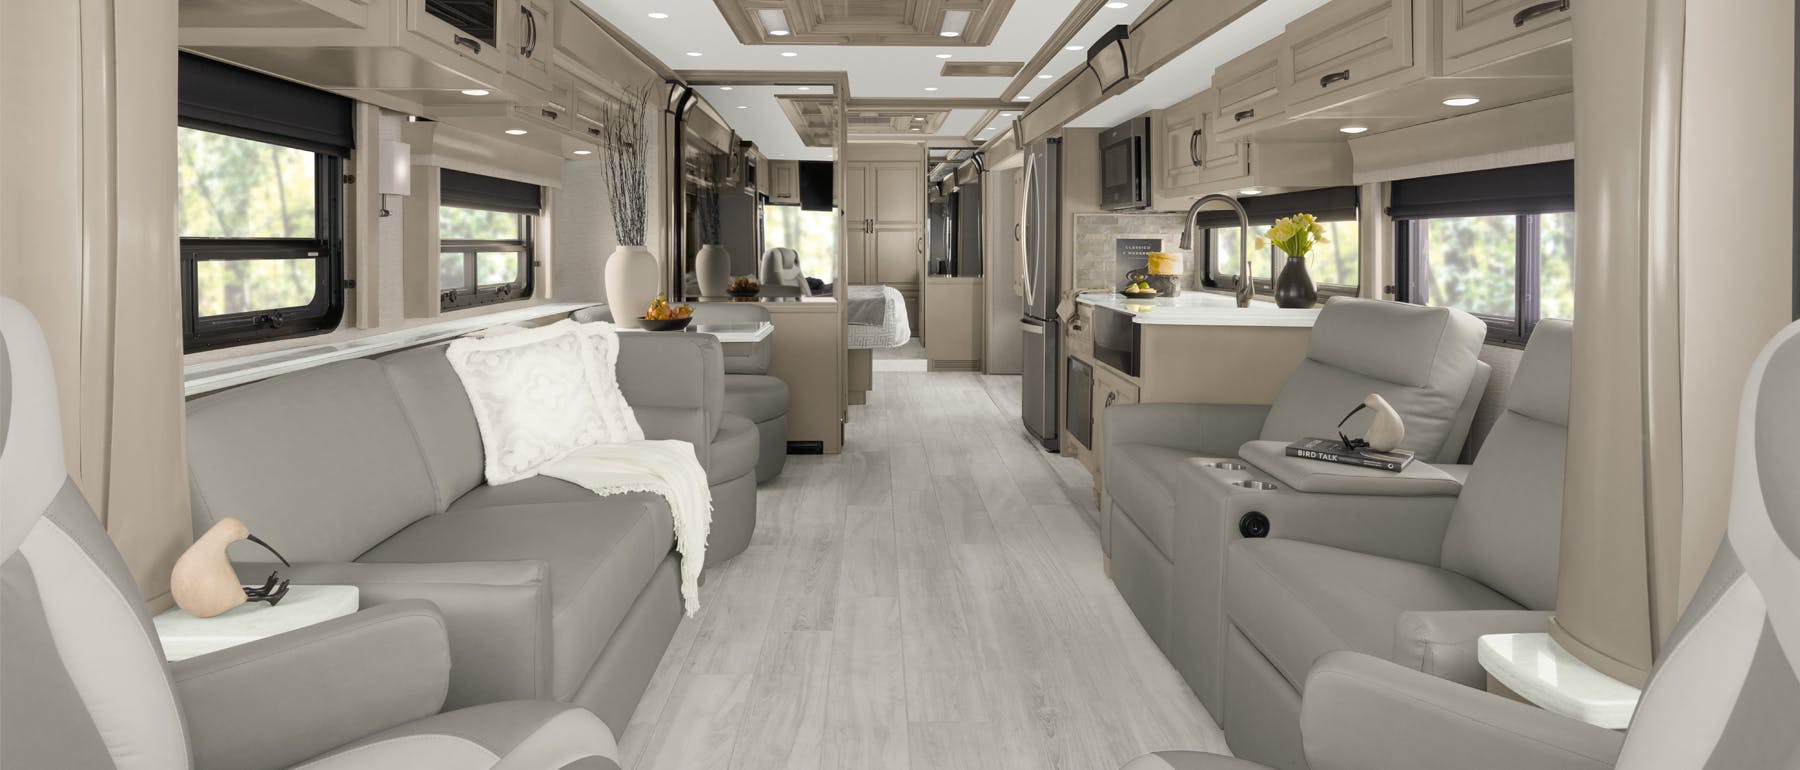 Newmar's 2024 Super Star luxury motor coach